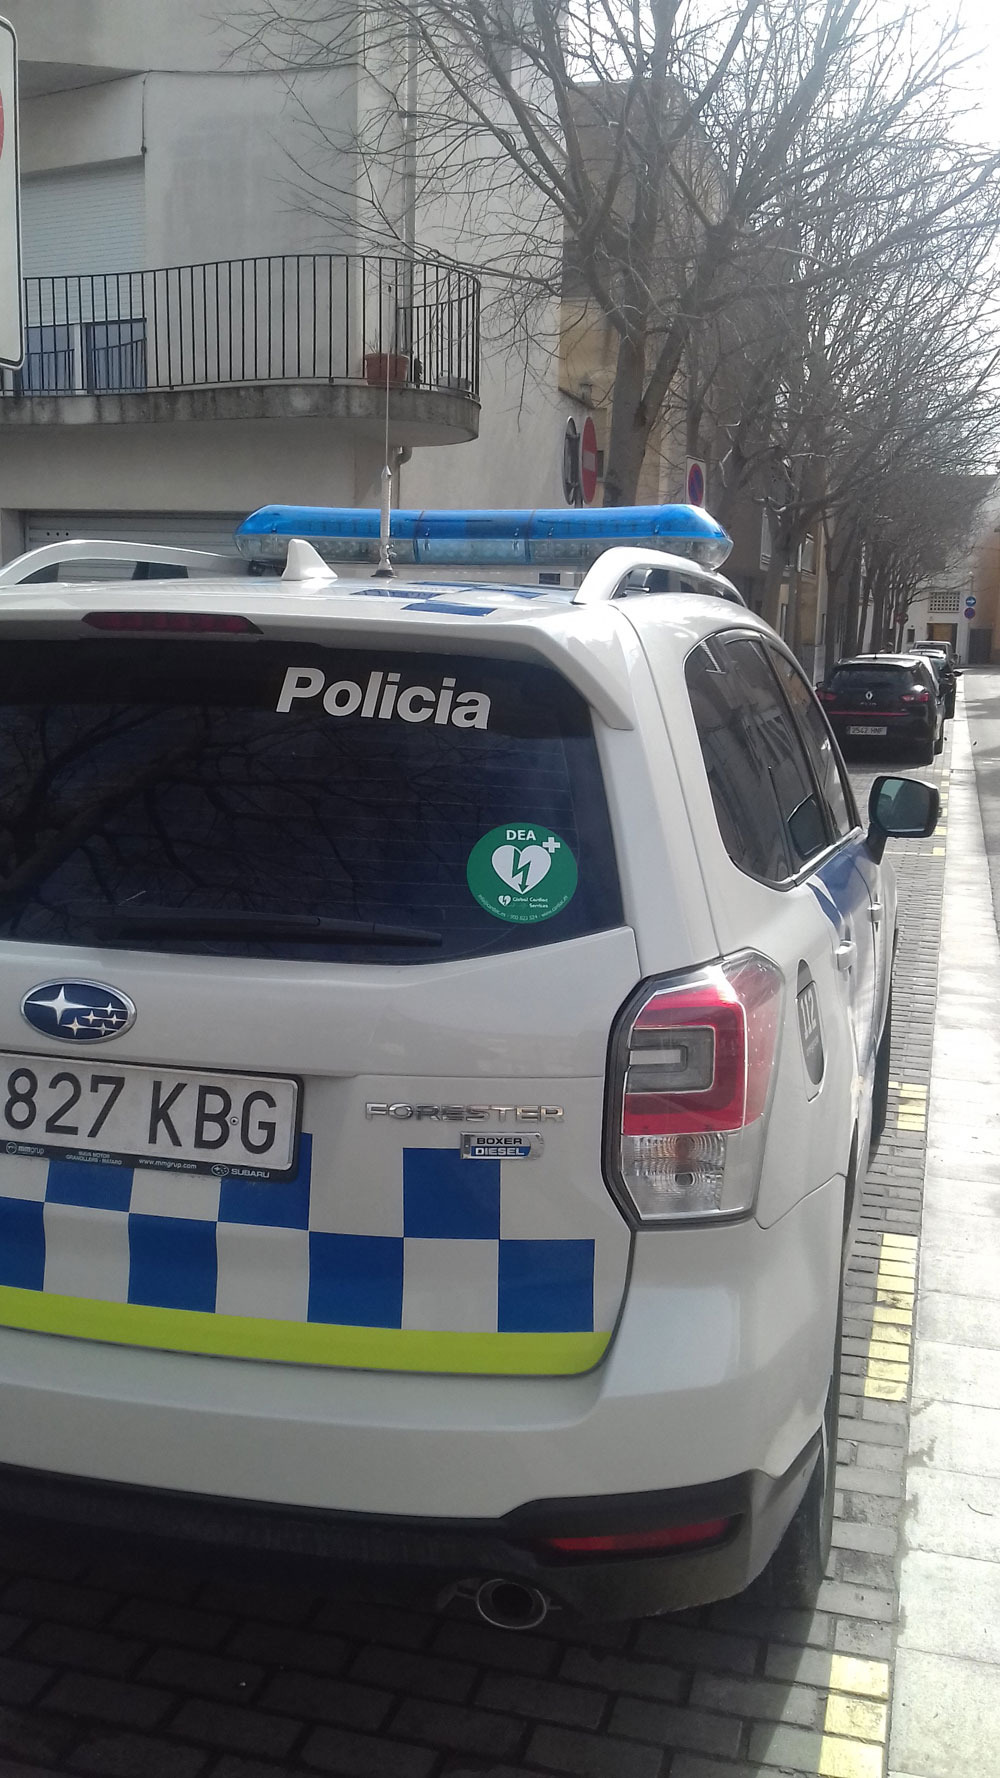 DEA - Vehicle policia local